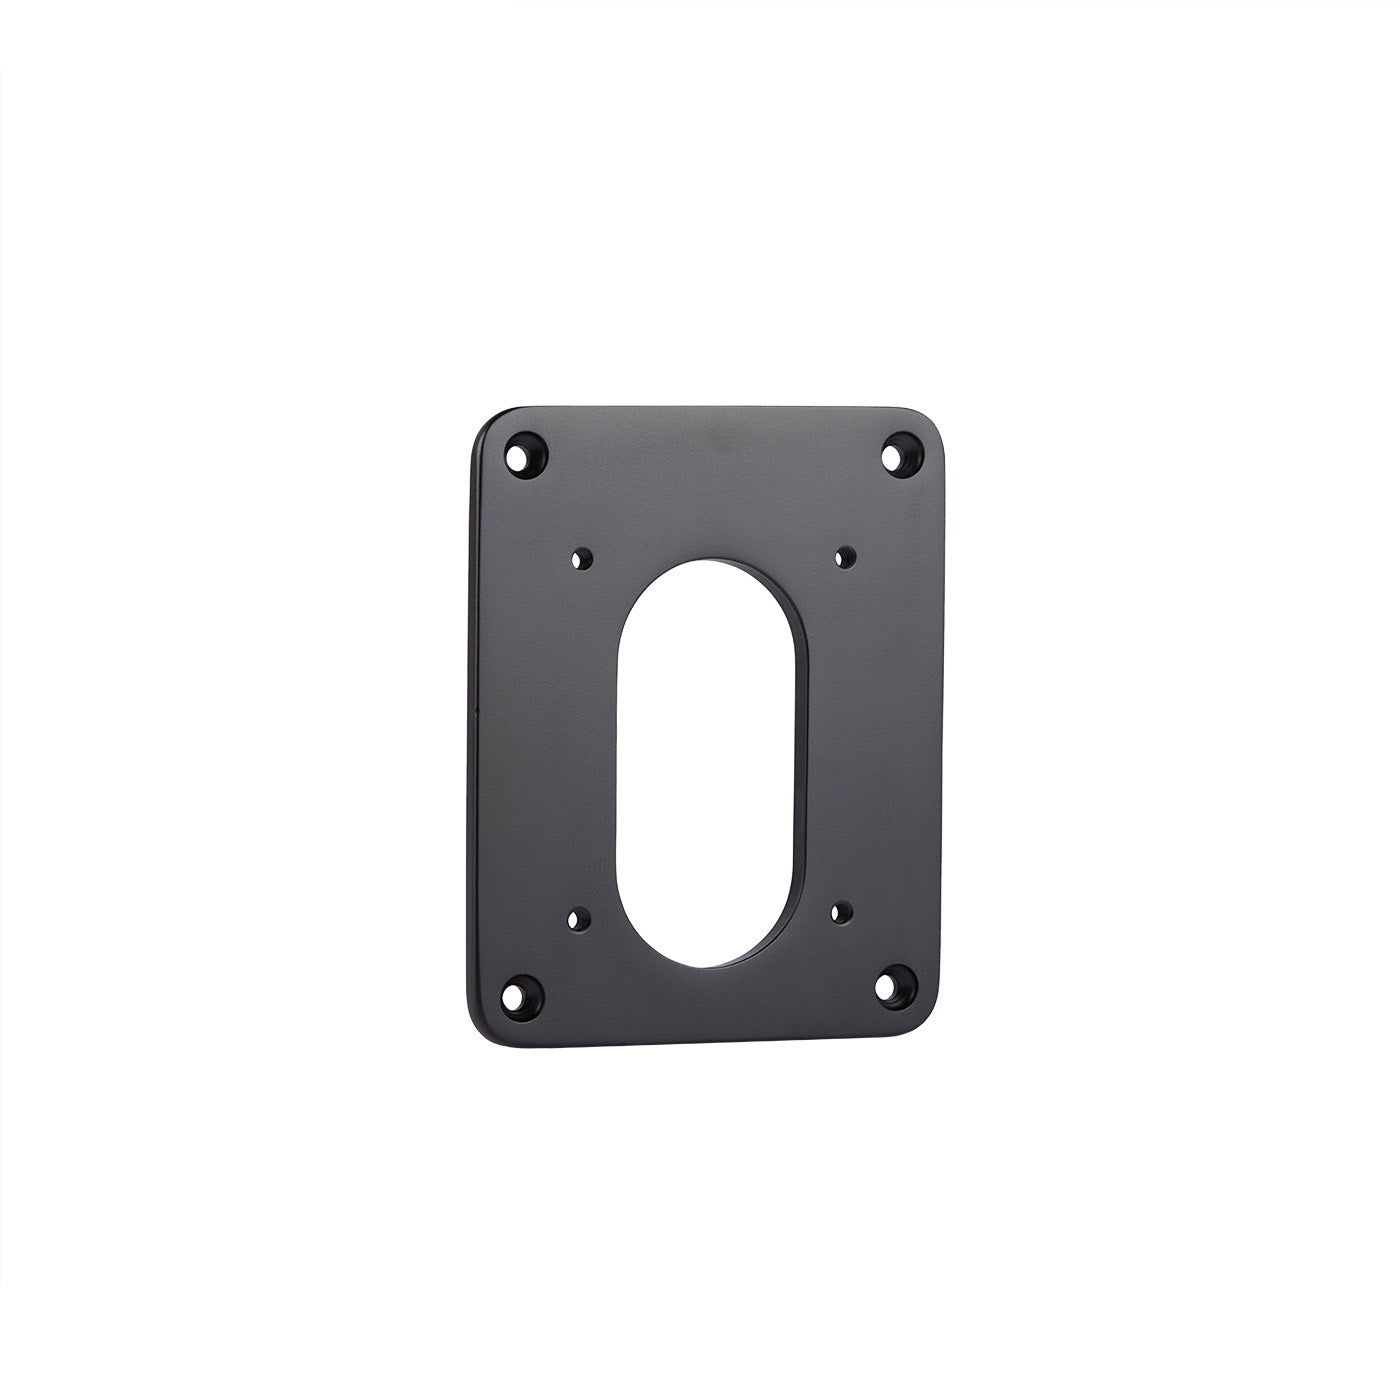 Aquor Stainless Steel Mounting Plate V2+ in Matte Black for House Hydrant V2+